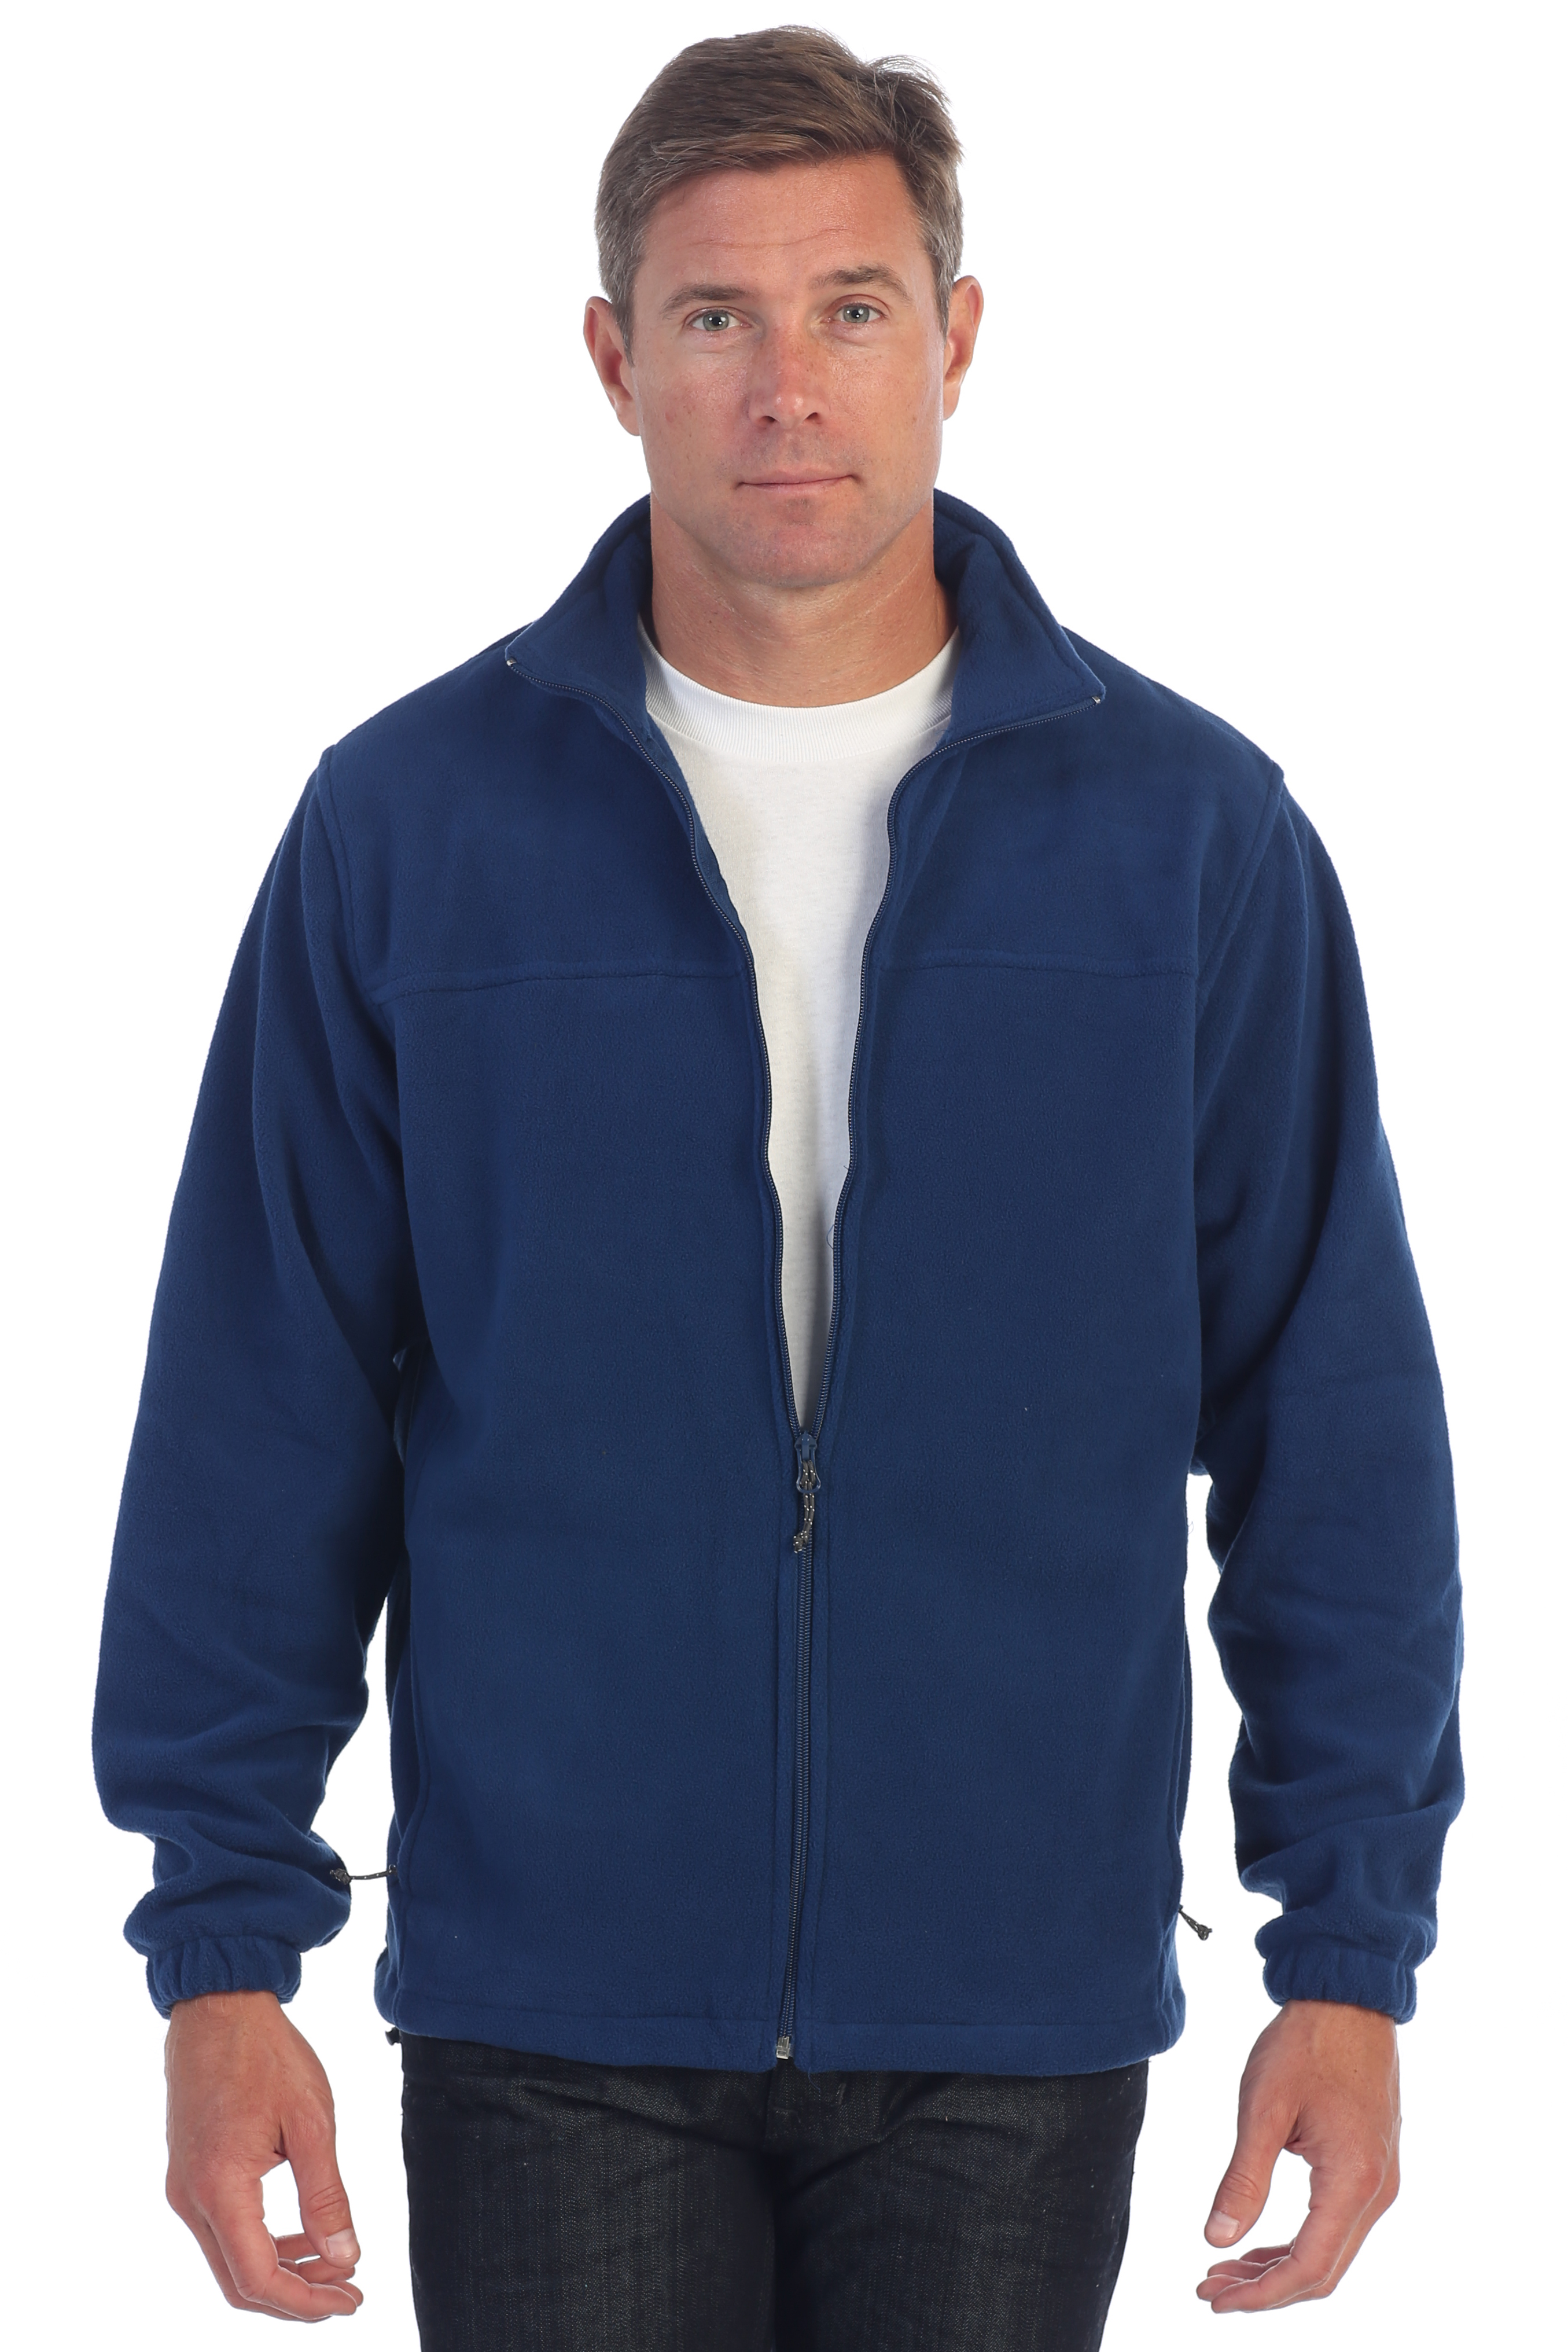 Gioberti Mens Full Zip Polar Fleece Jacket - image 1 of 4